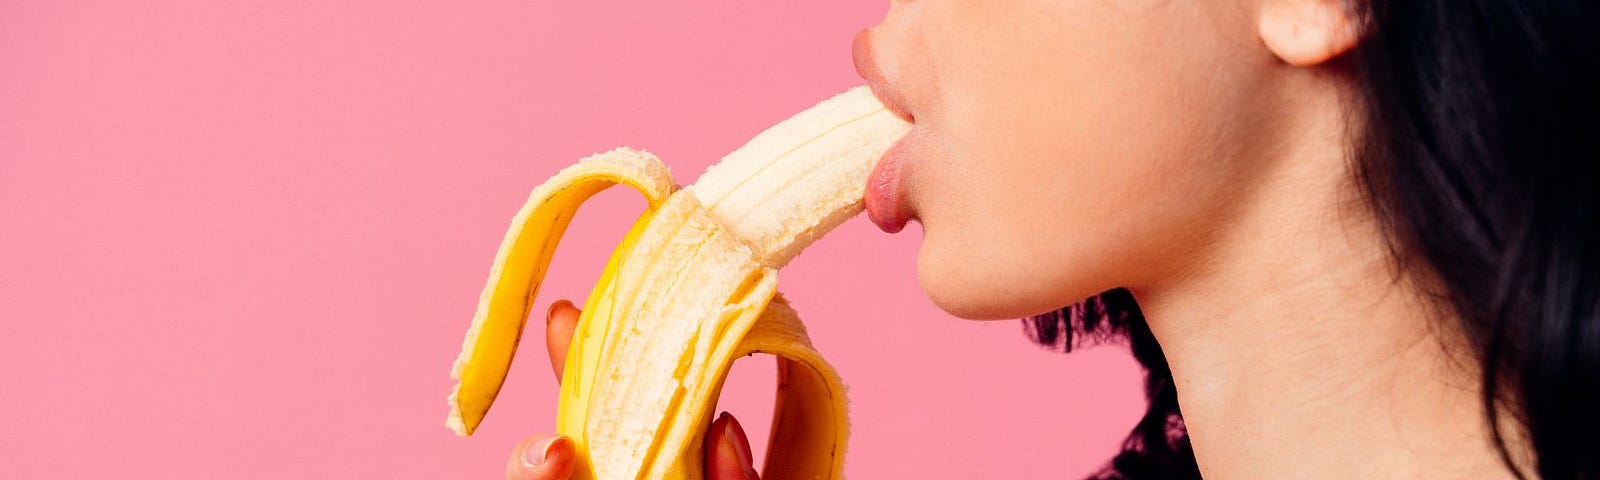 a woman sucking a banana